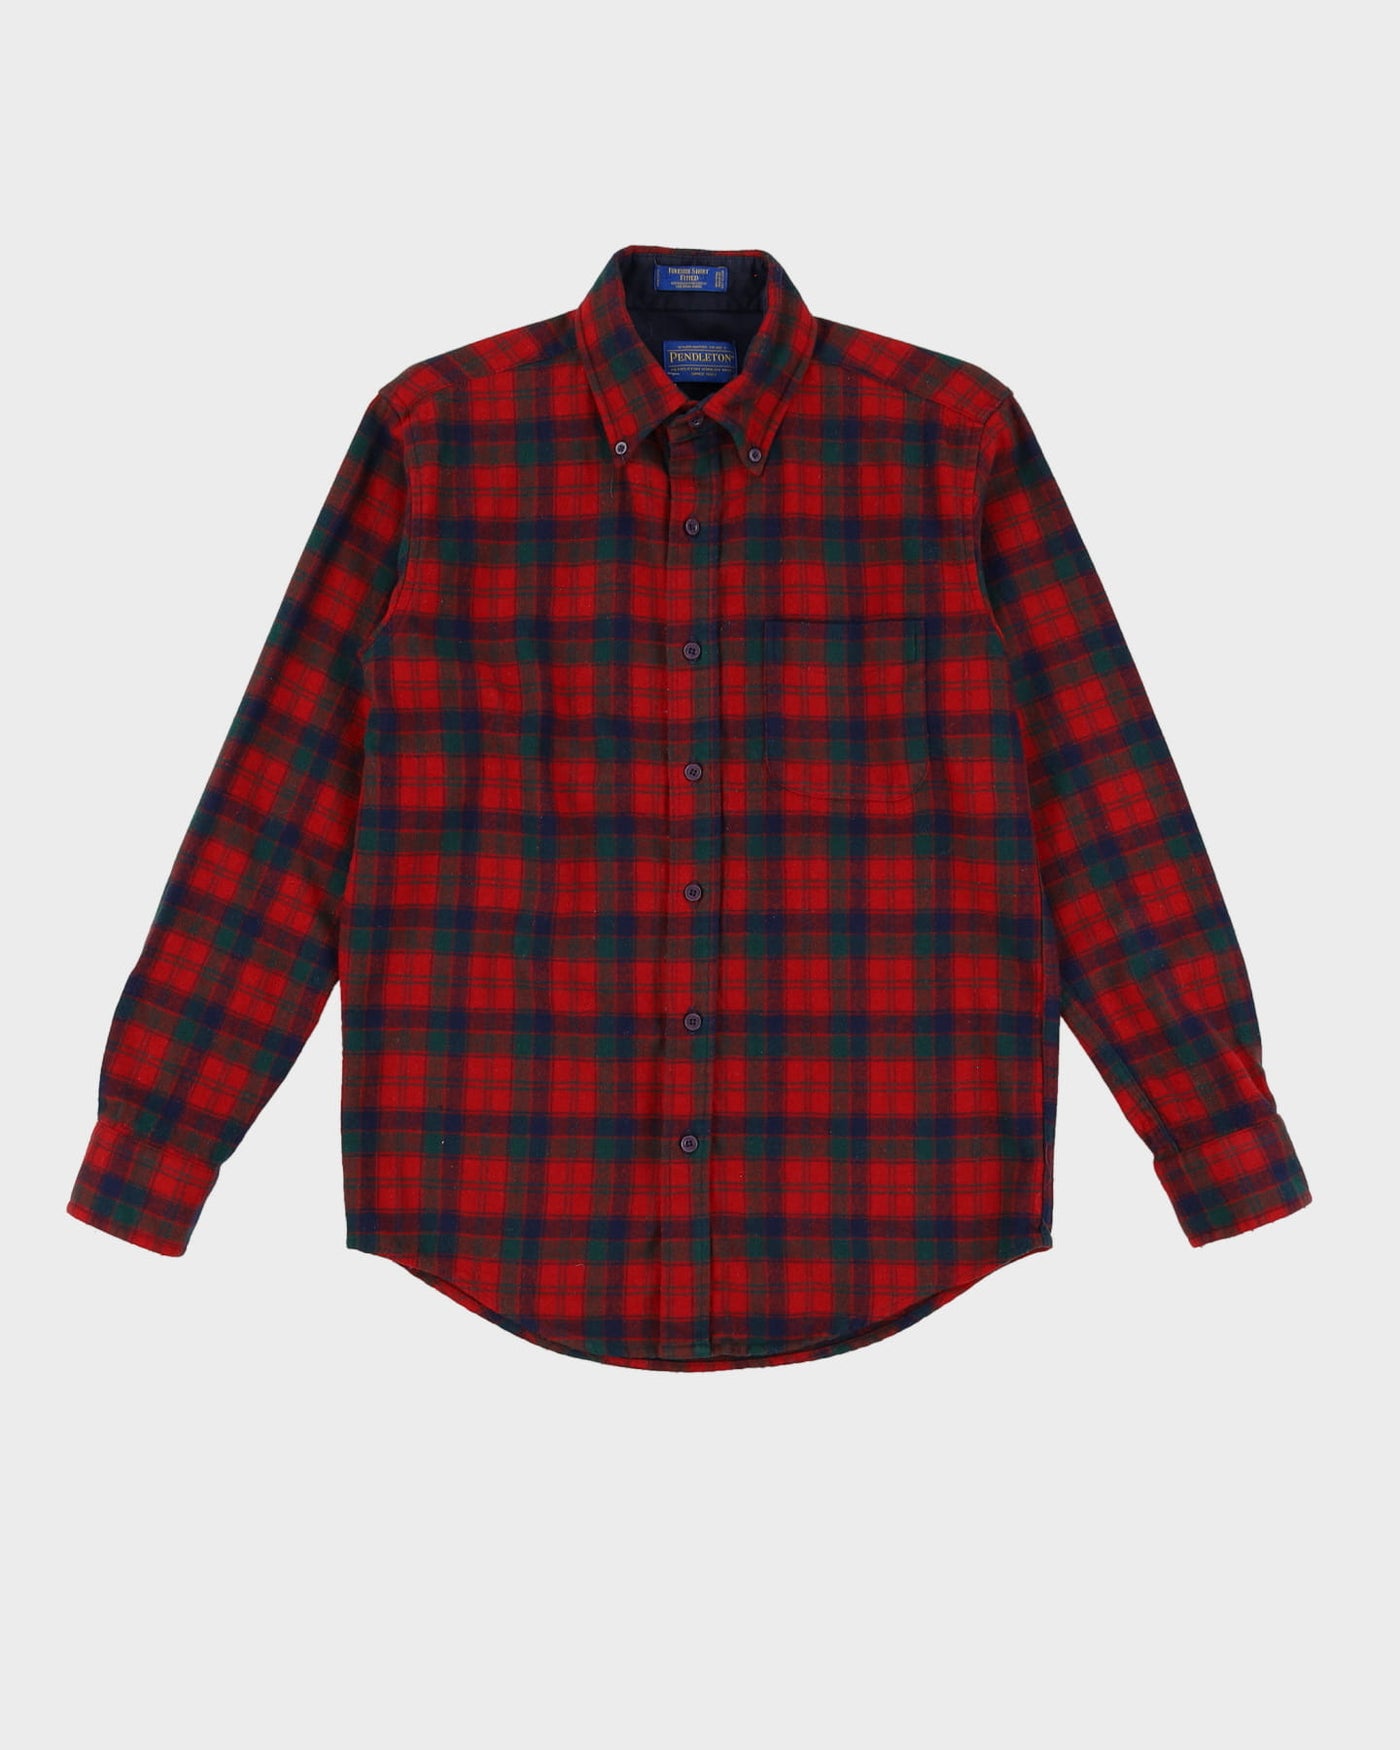 80s Pendleton Green / Brown Check Pattern Flannel Shirt - S